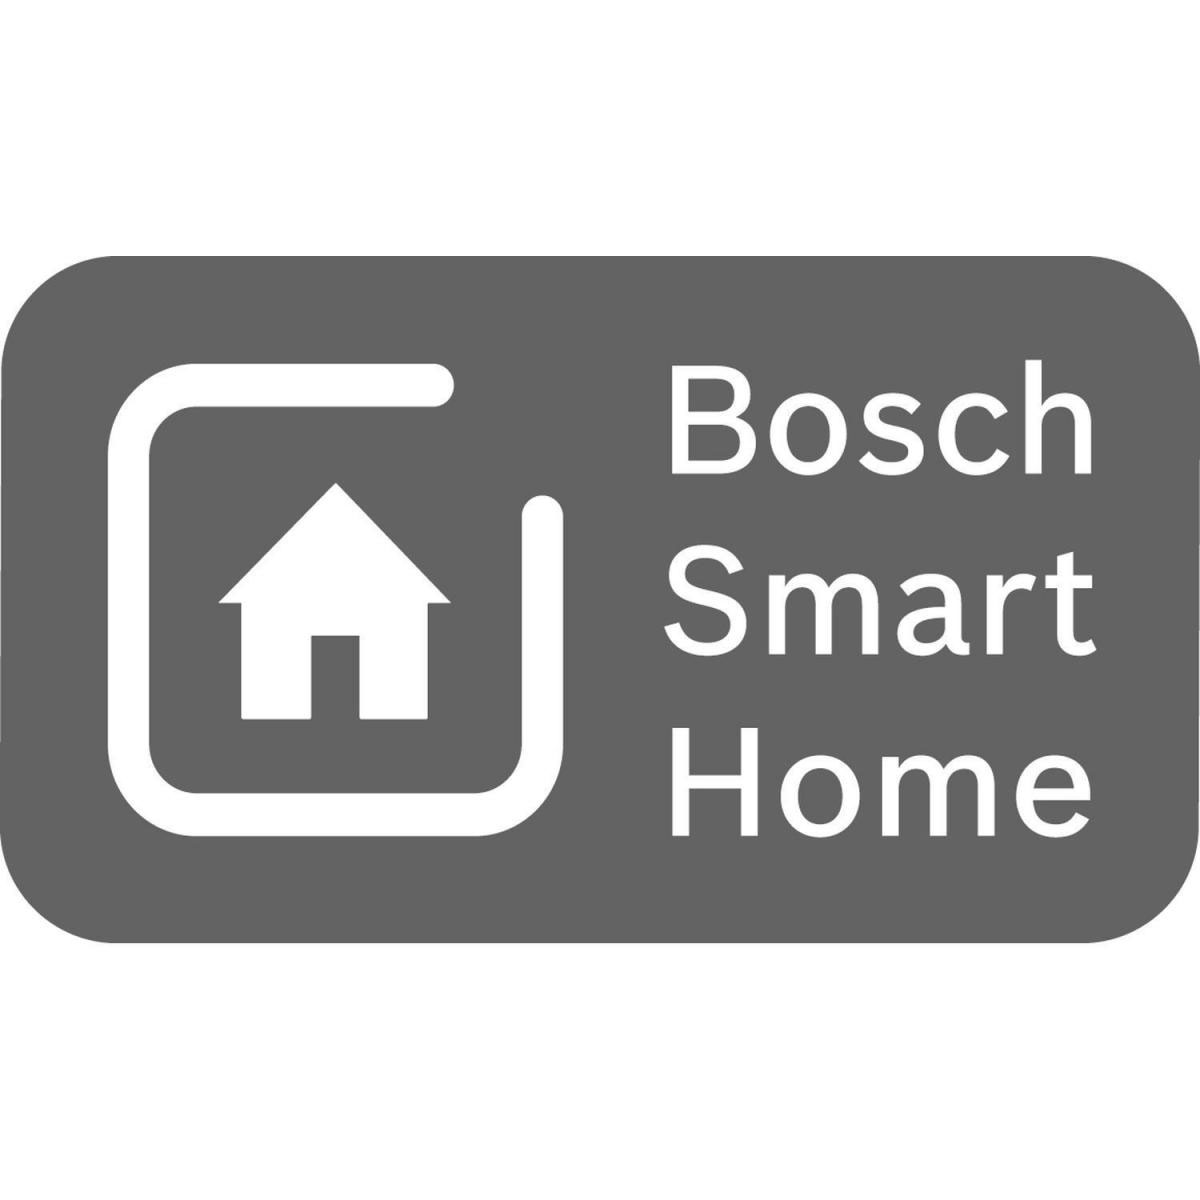 https://www.baywa-baumarkt.de/media/5f/8c/b7/1673516233/215368_Bosch_Universalschalter_Smart_Home_weiss_8750000372_07.jpg